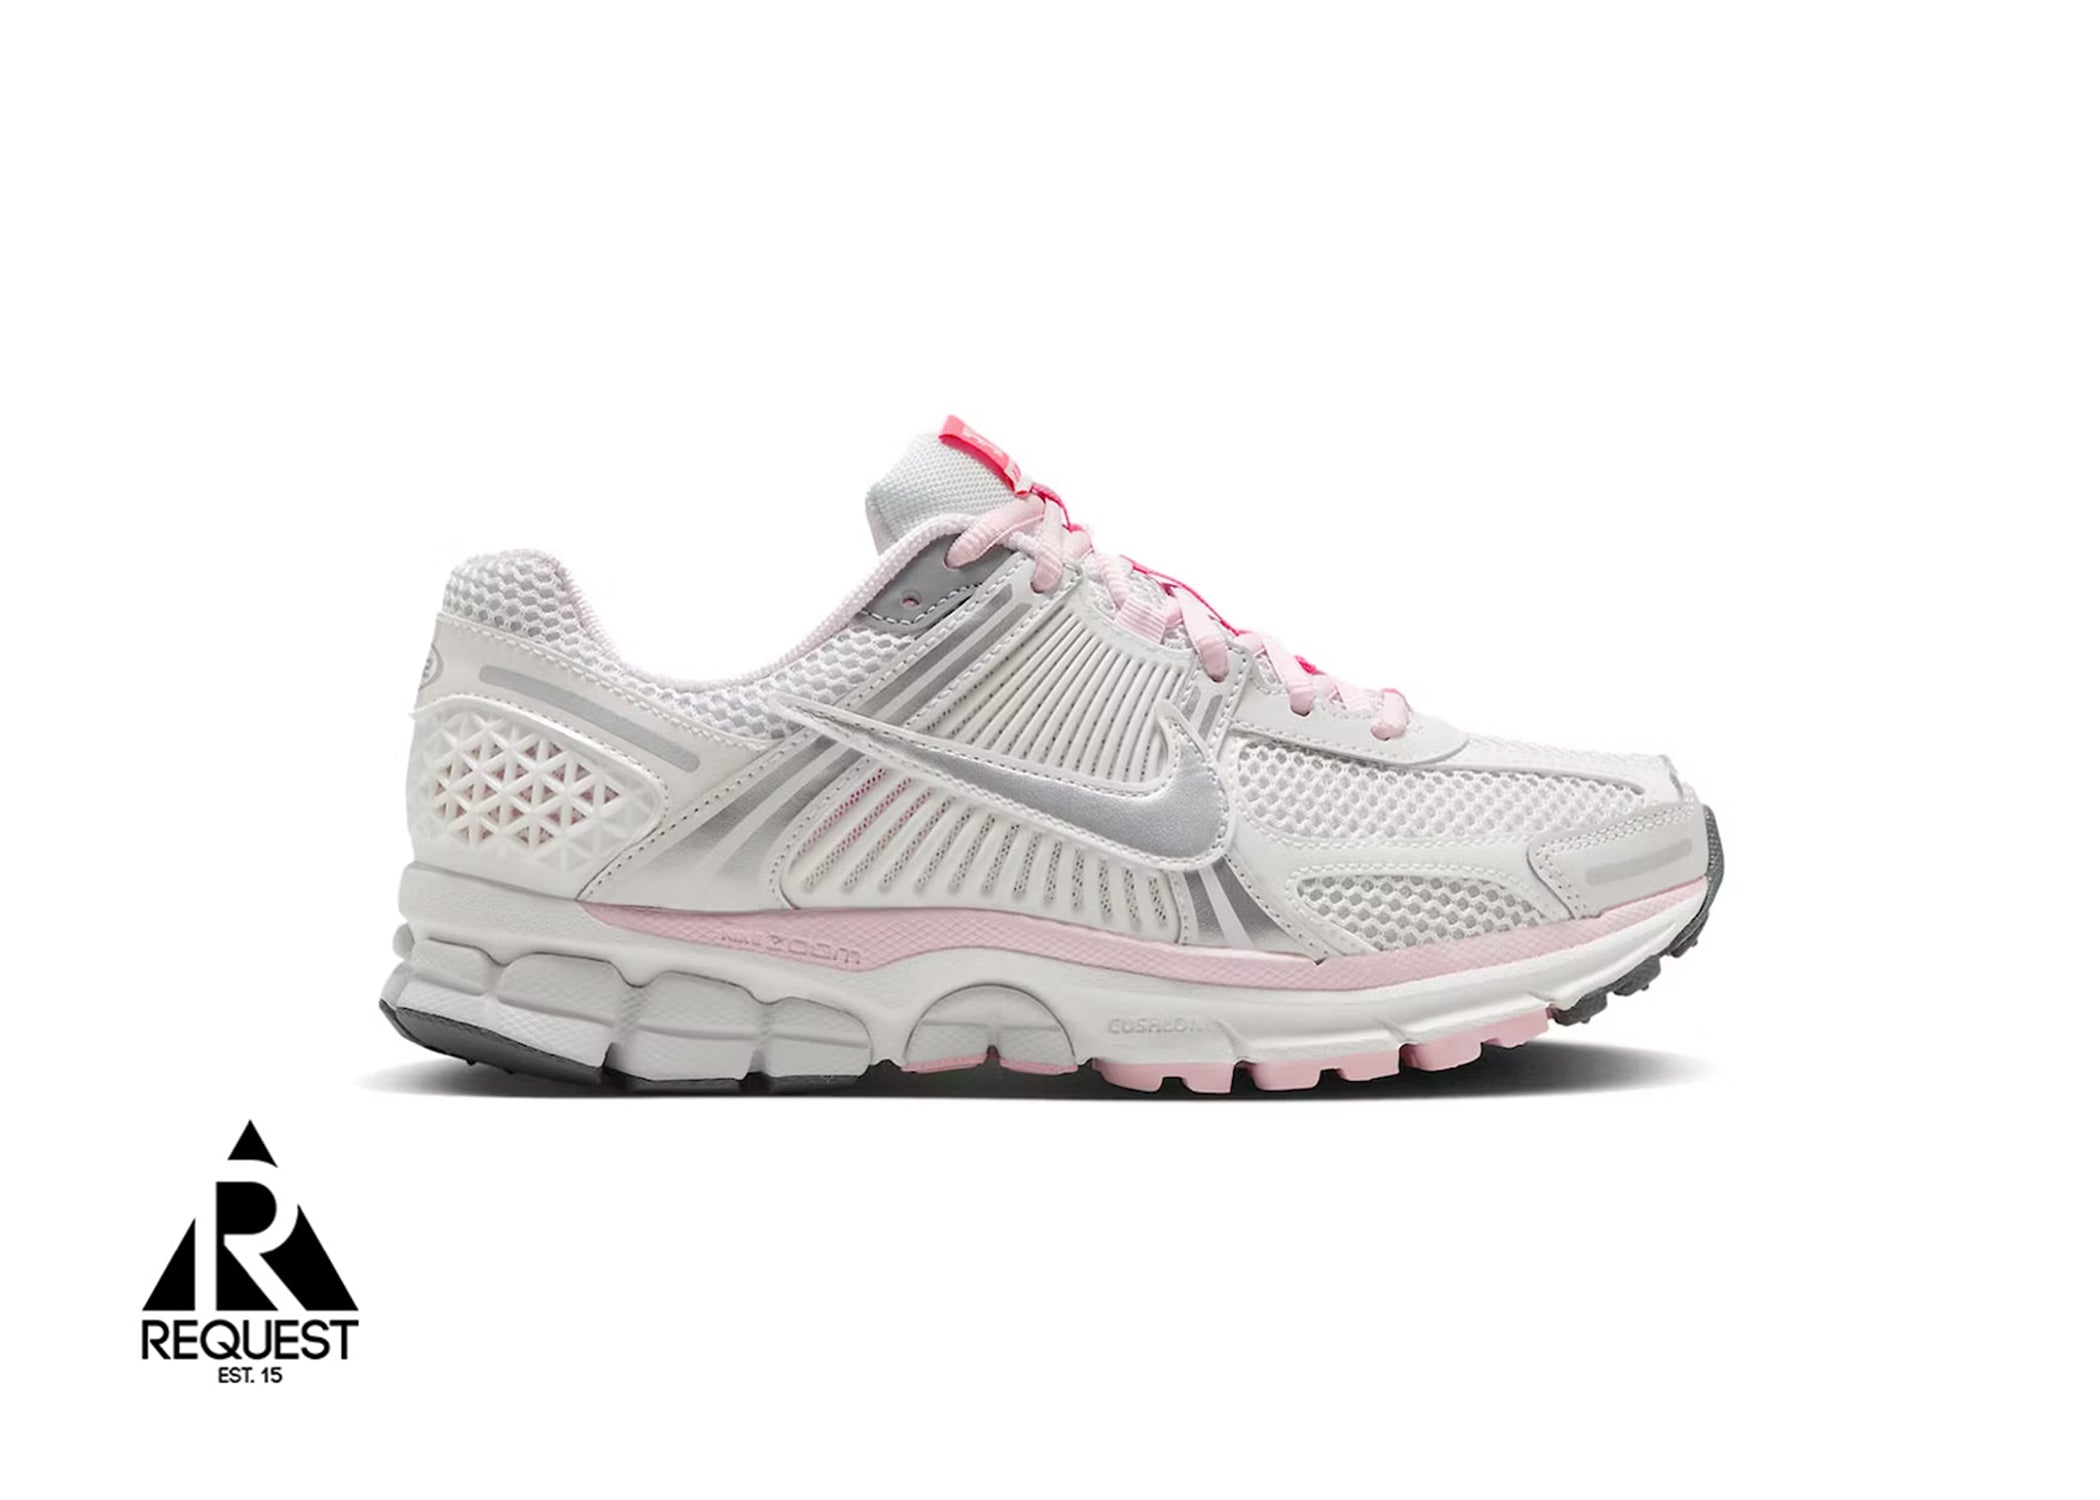 Nike Zoom Vomero 5 520 Pack "White Pink" (W)